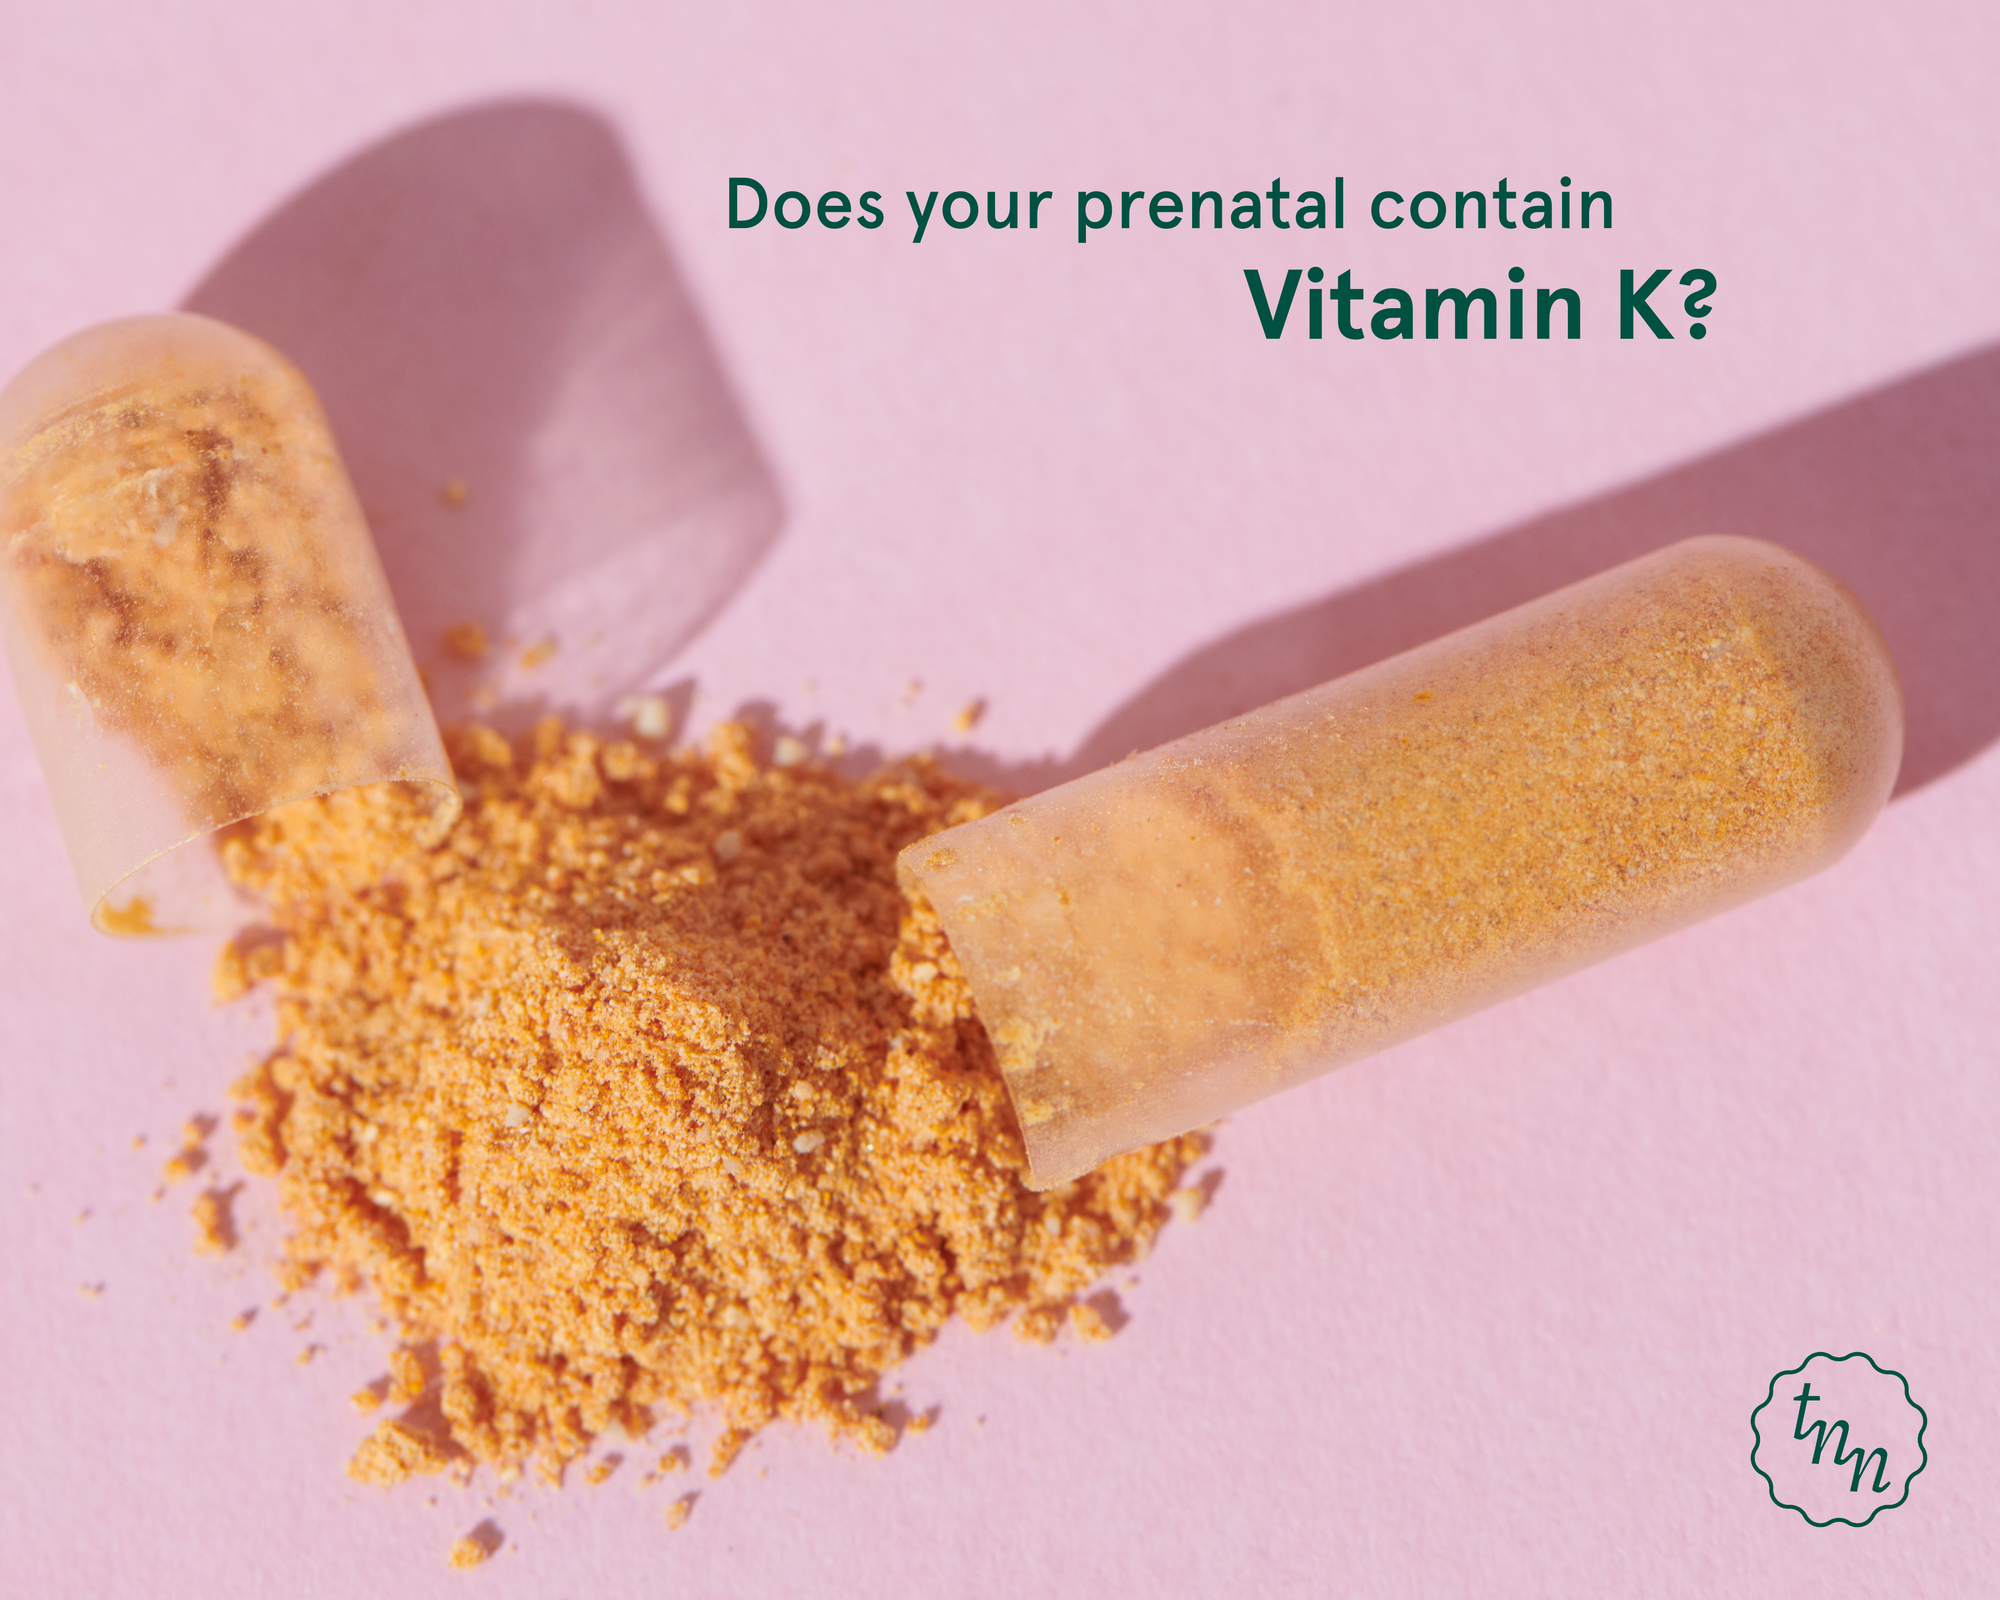 Should my prenatal contain Vitamin K1 and K2?